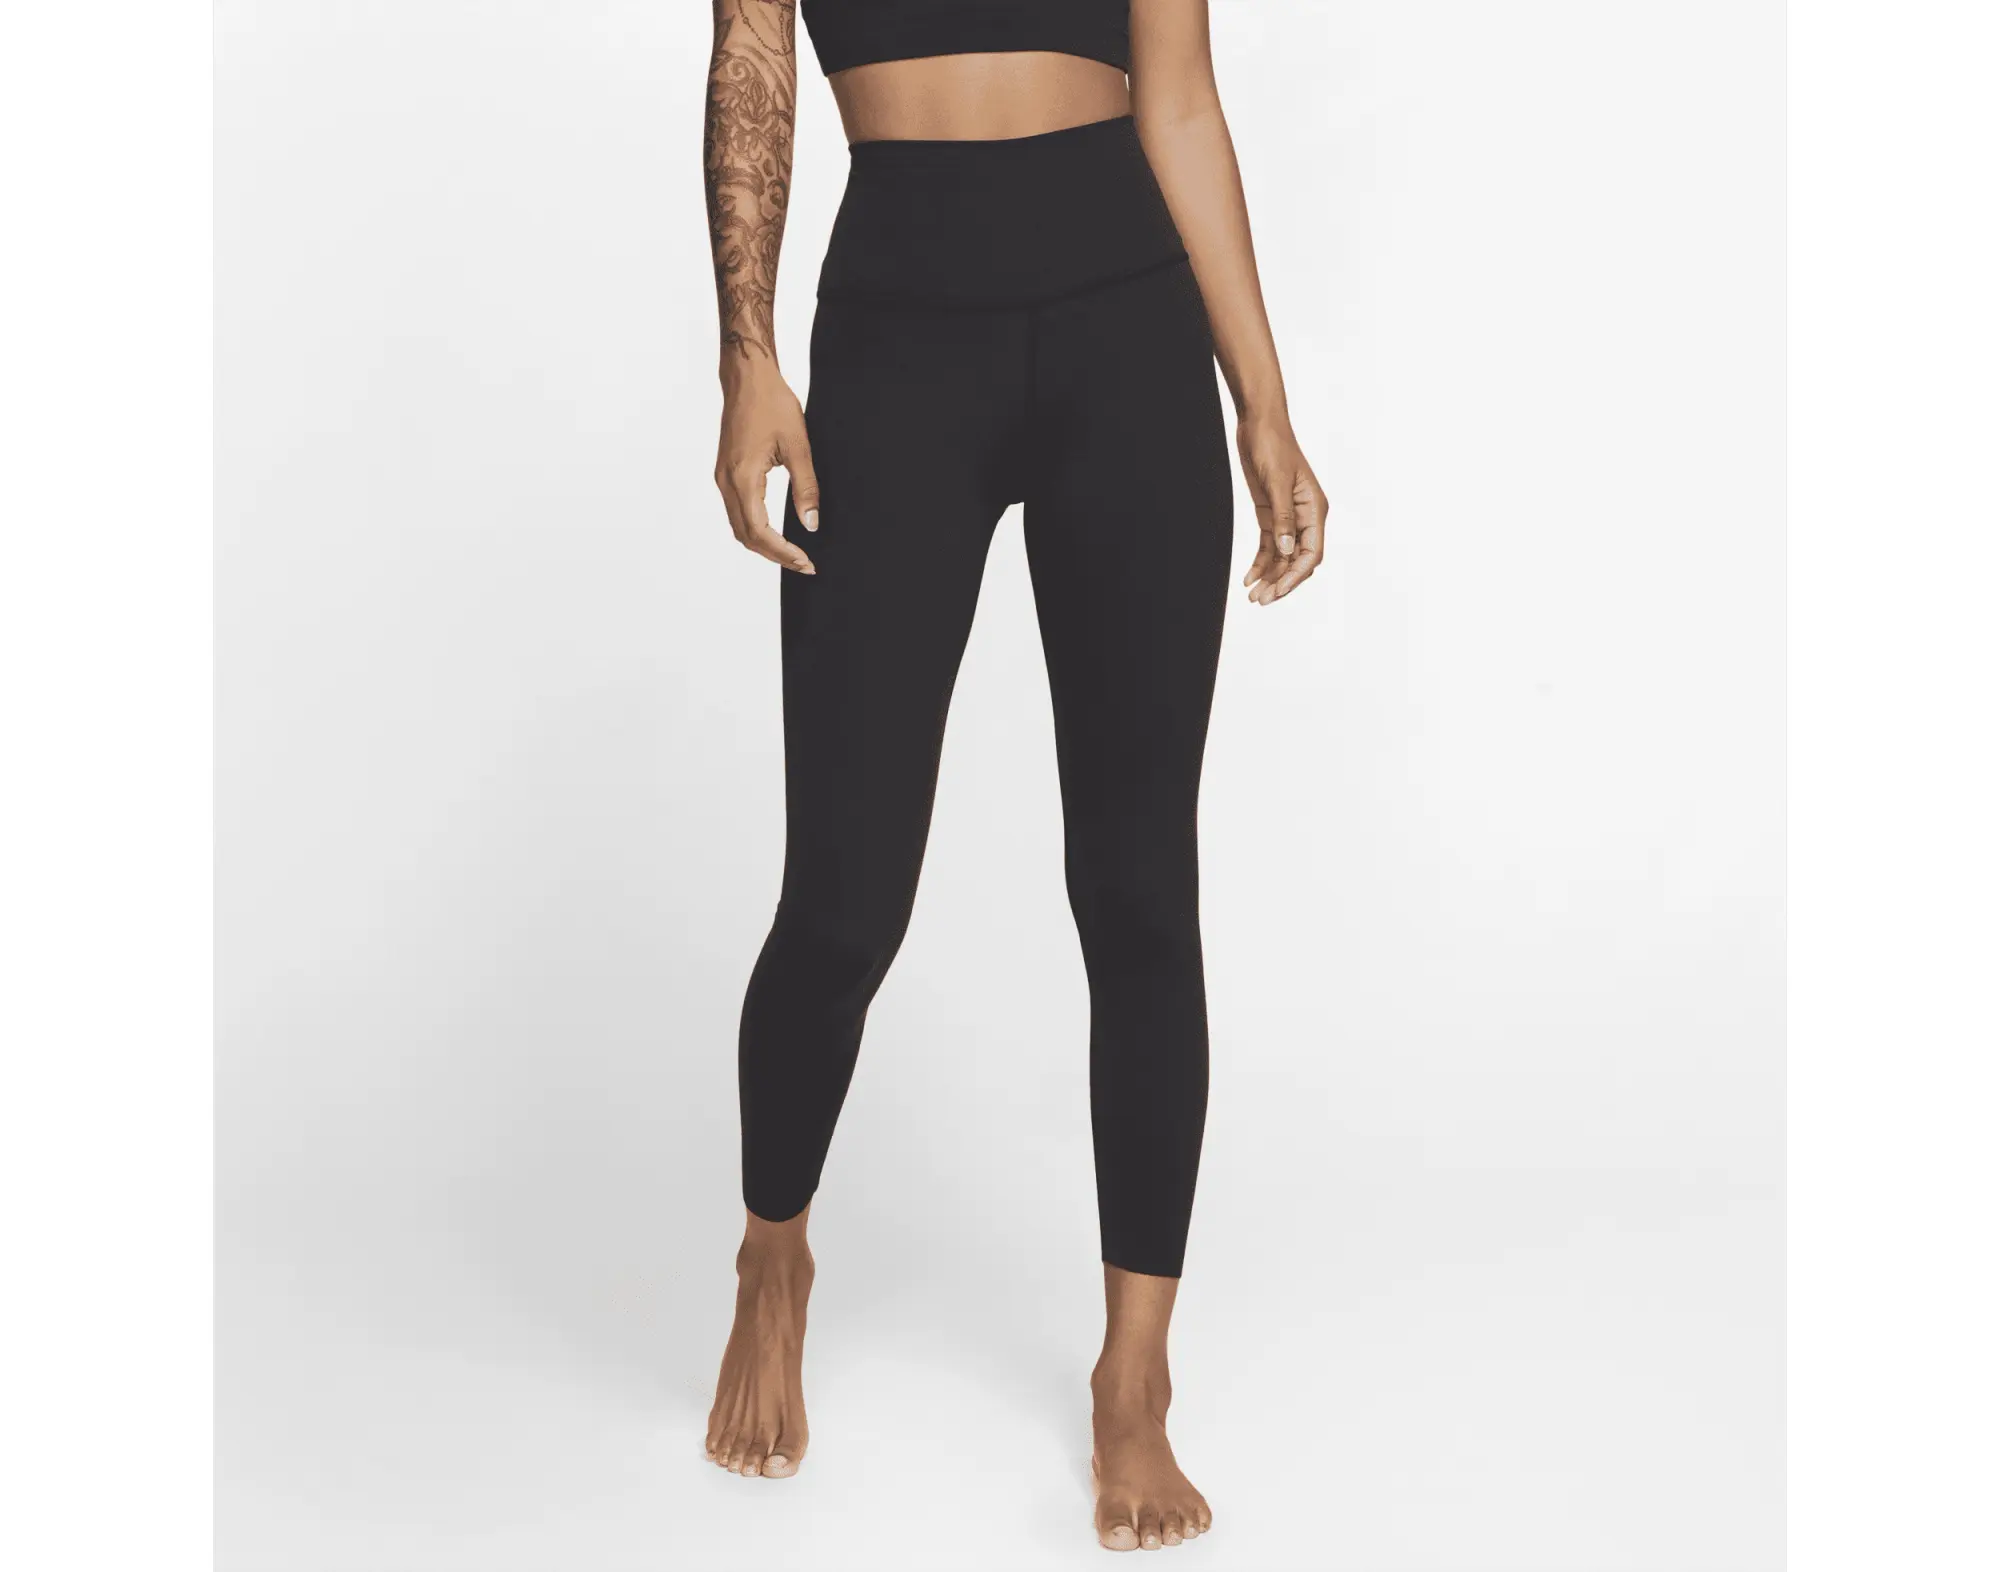 Nike Yoga Luxe fleece 7/8 sweatpants in black